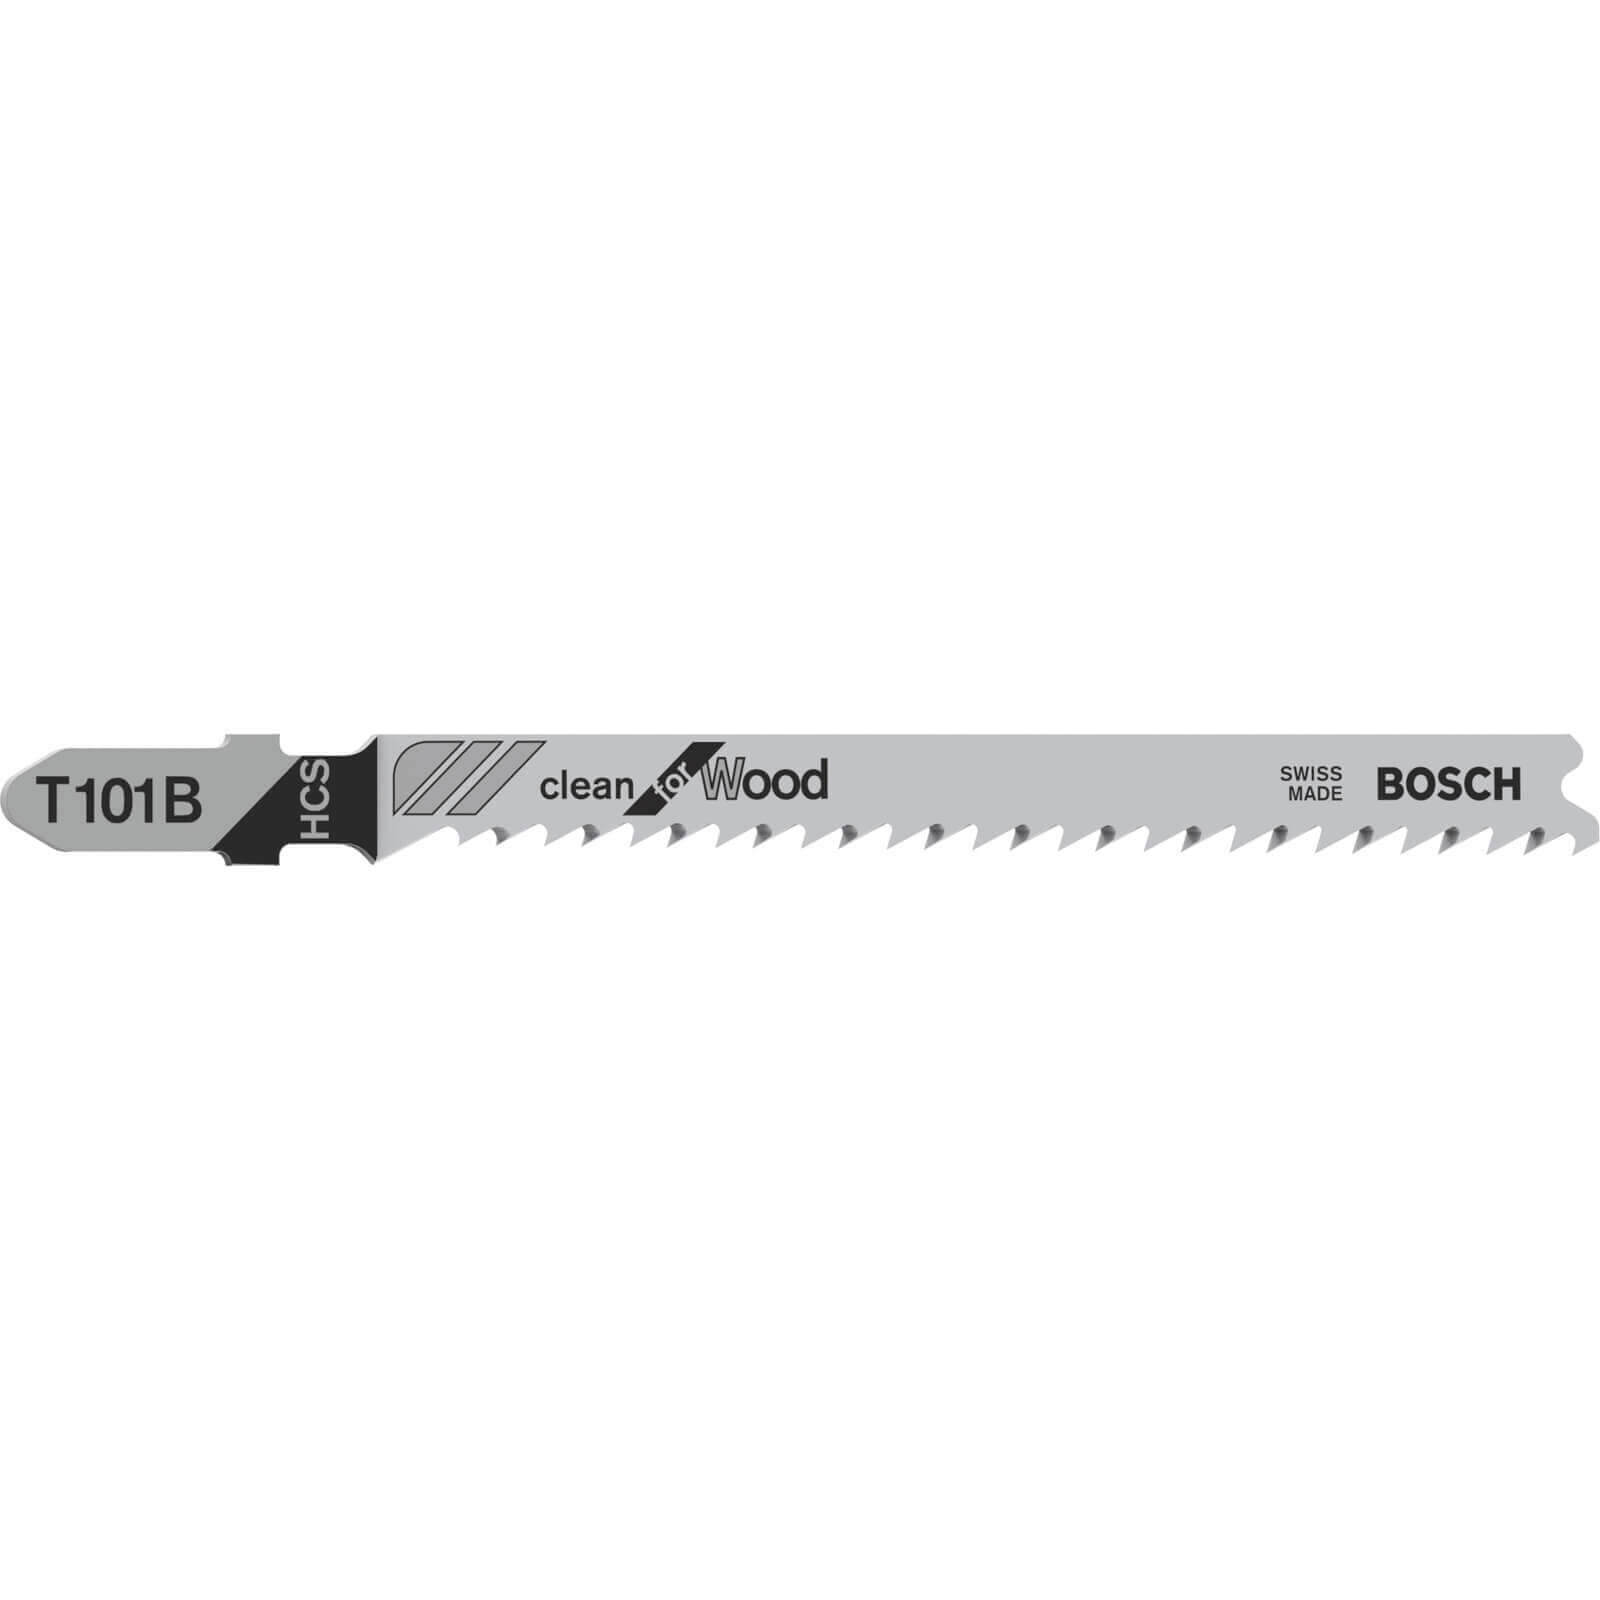 Bosch T101 B Wood Cutting Jigsaw Blades Pack of 3